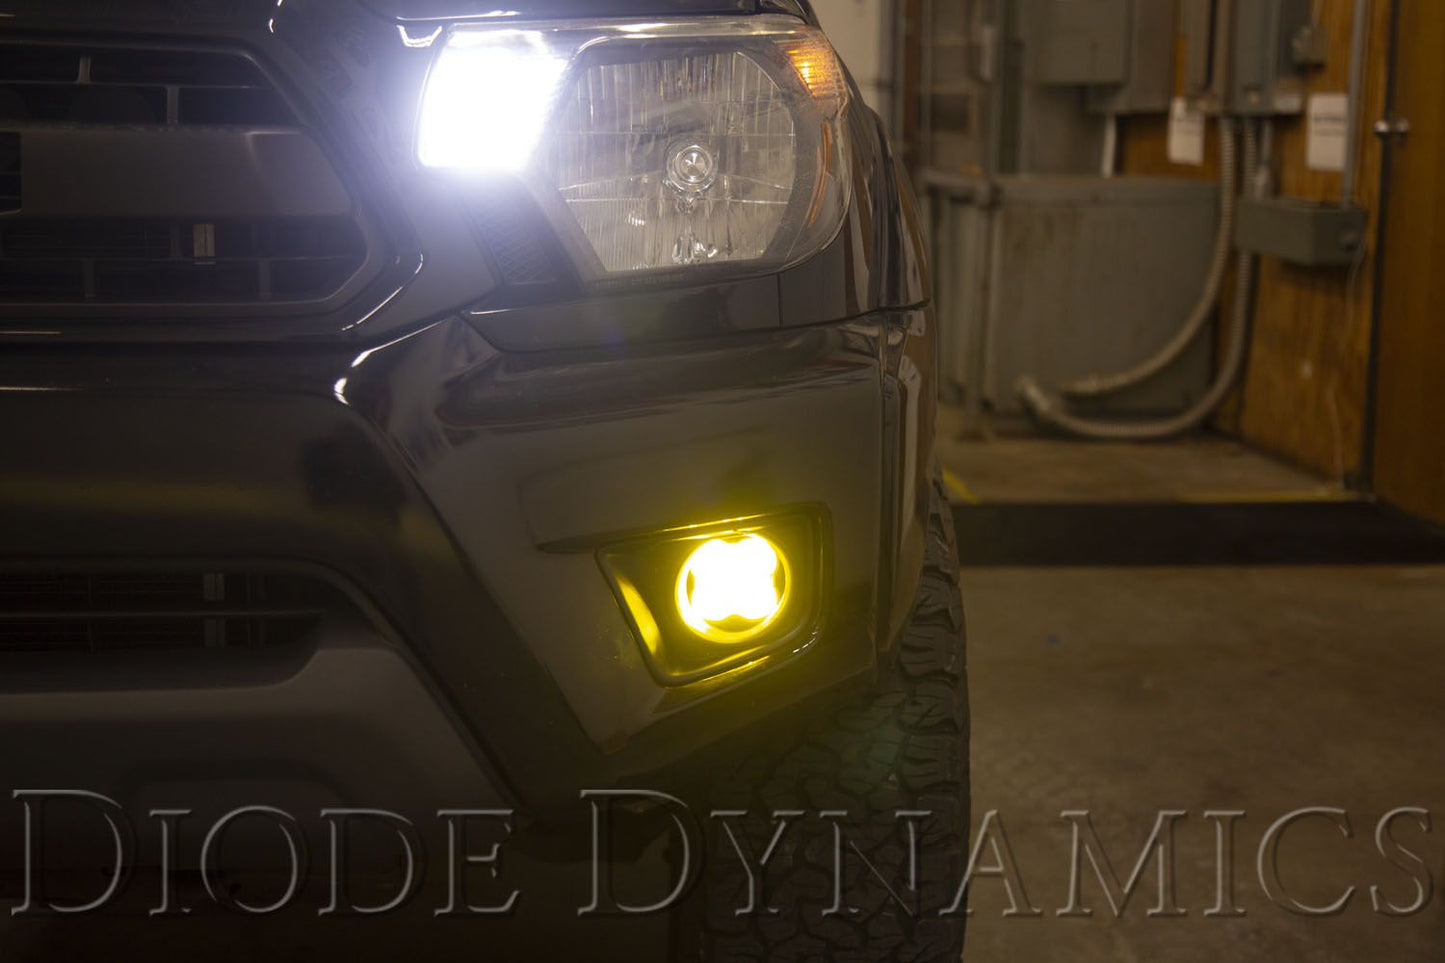 SS3 LED Fog Light Kit for 2012-2015 Toyota Tacoma